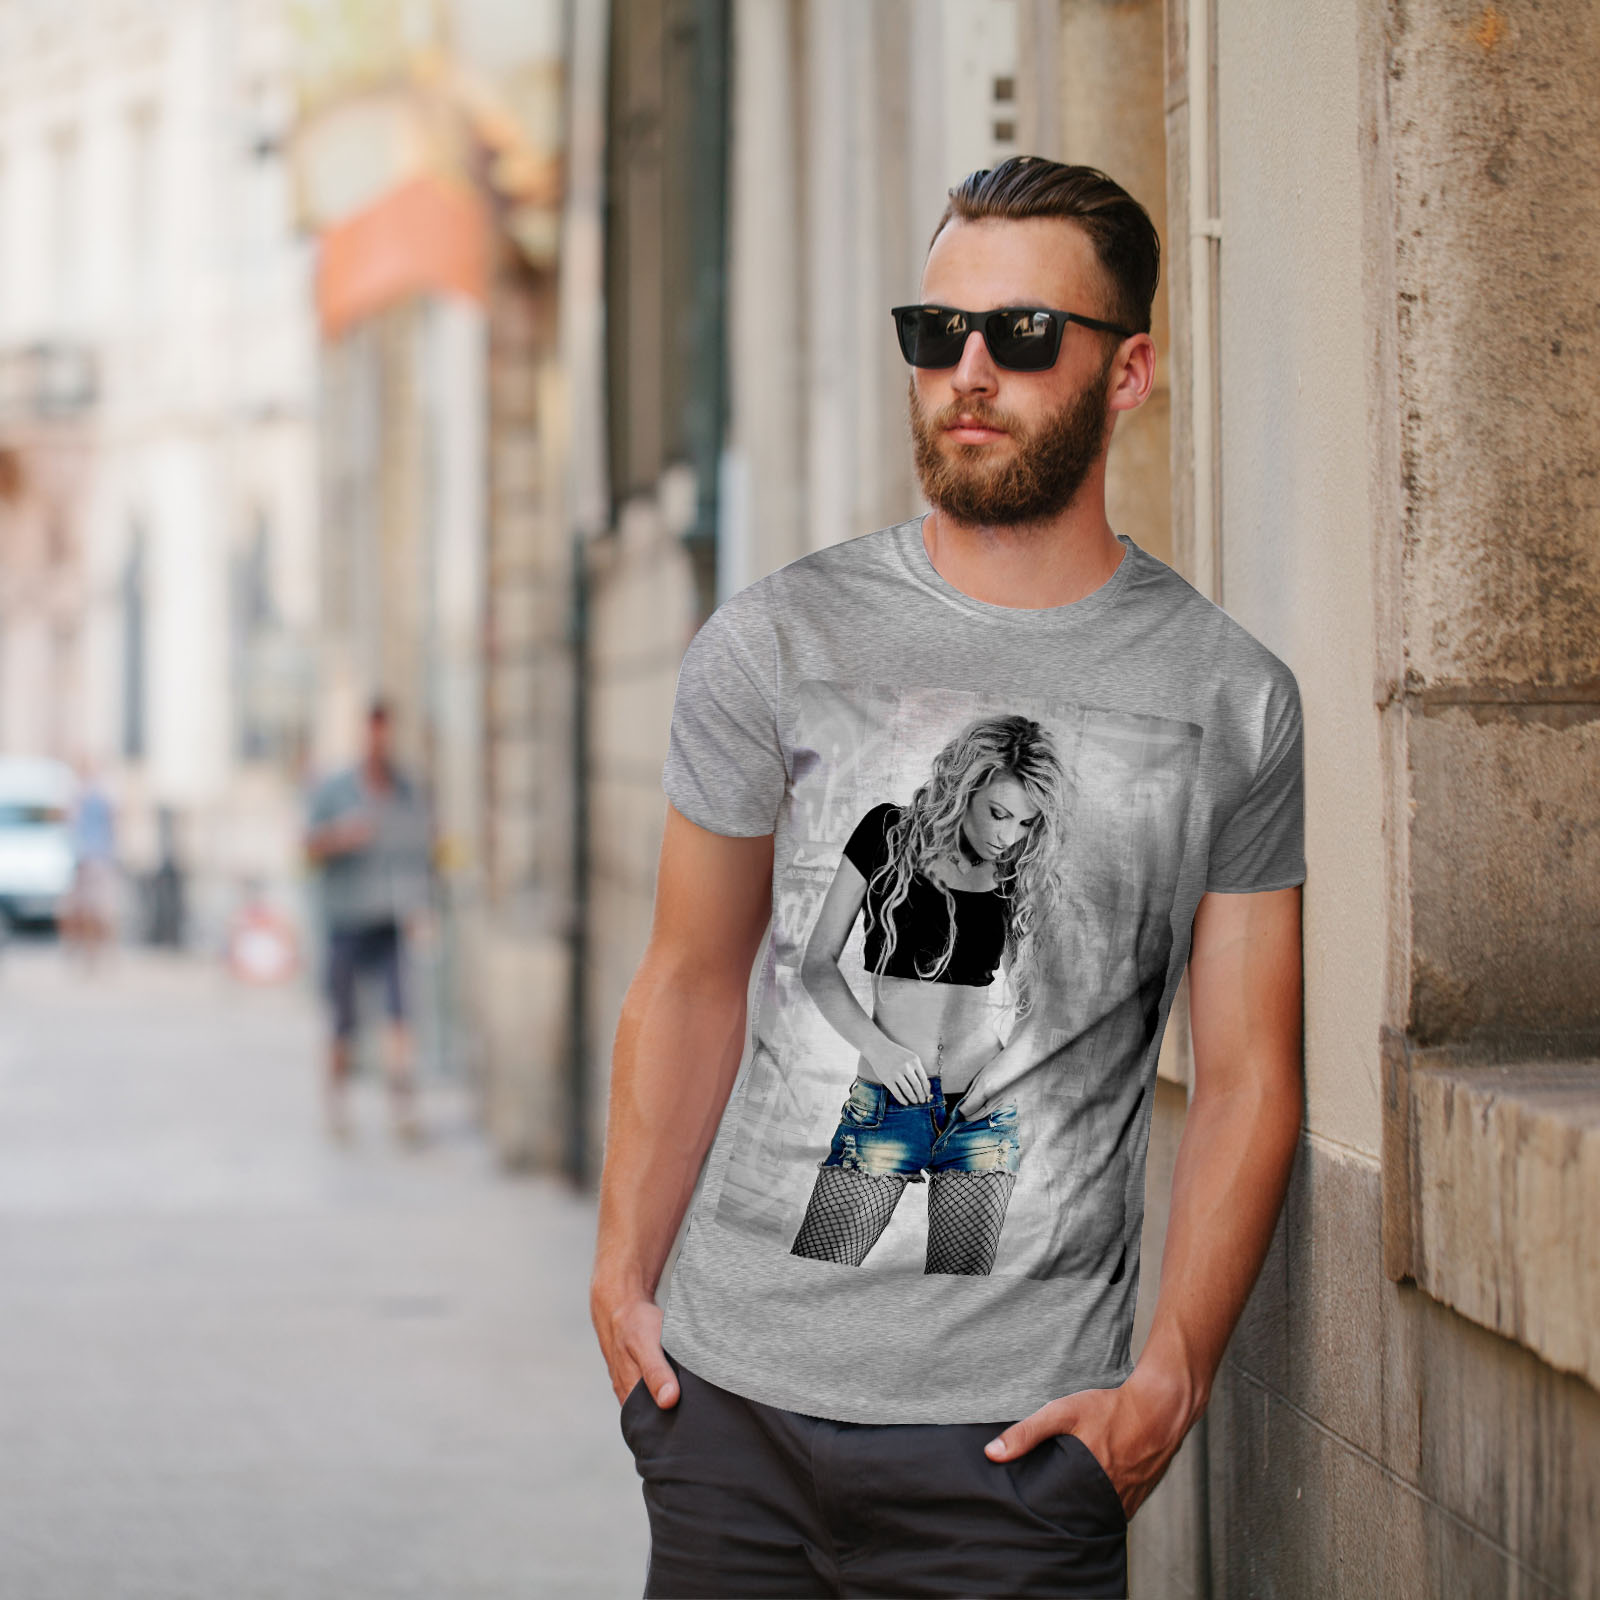 Wellcoda Lingerie Adult Girl Mens T-shirt, Panties Graphic Design